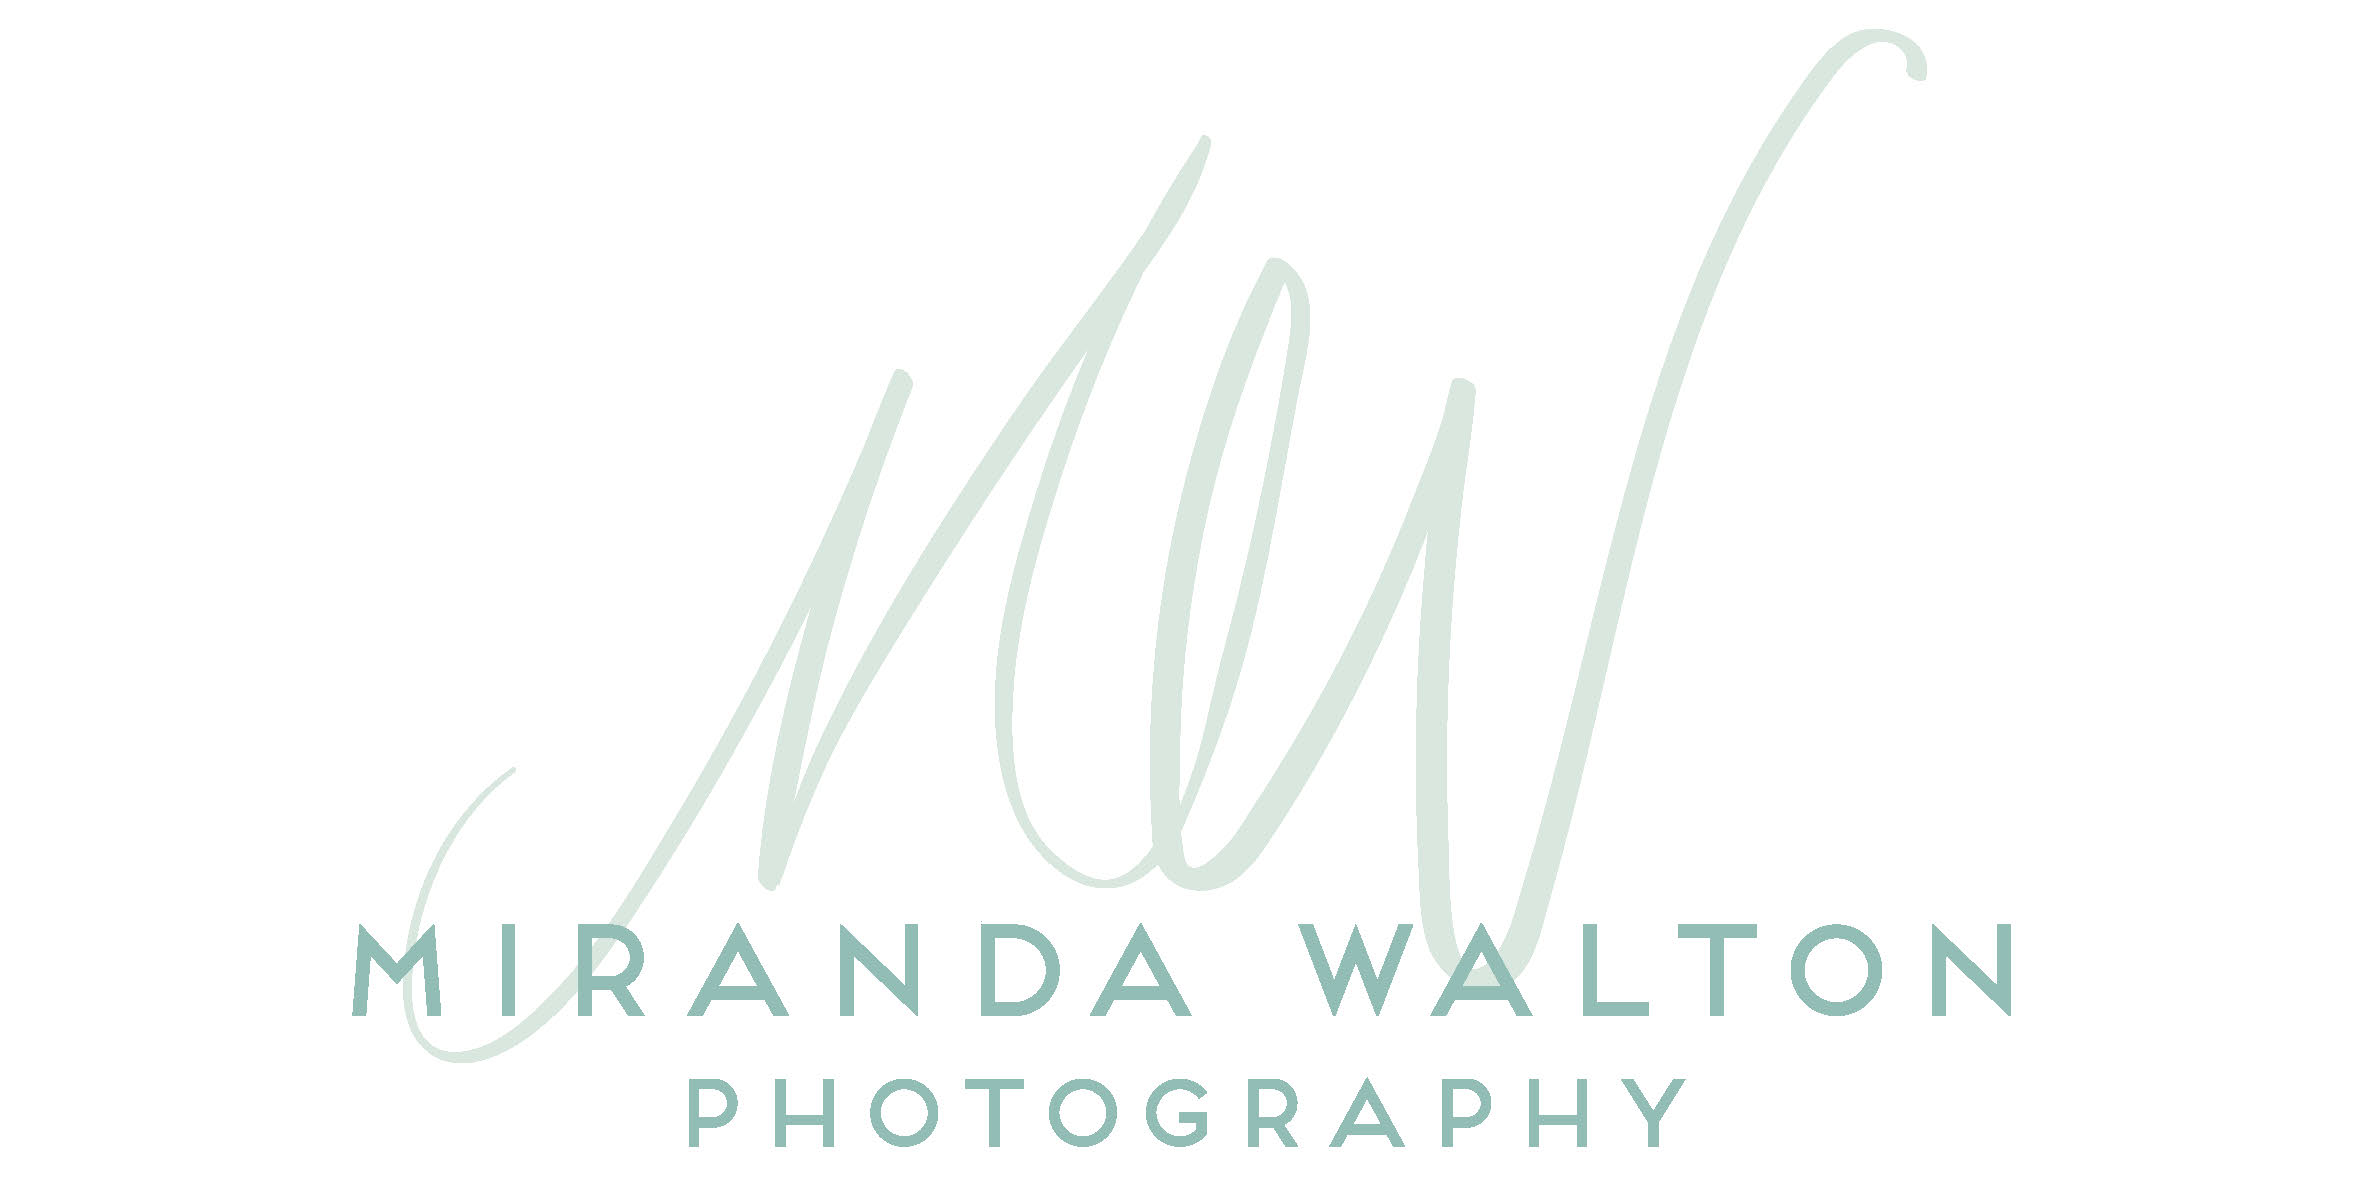 EXHIBITOR: Miranda Walton Photography